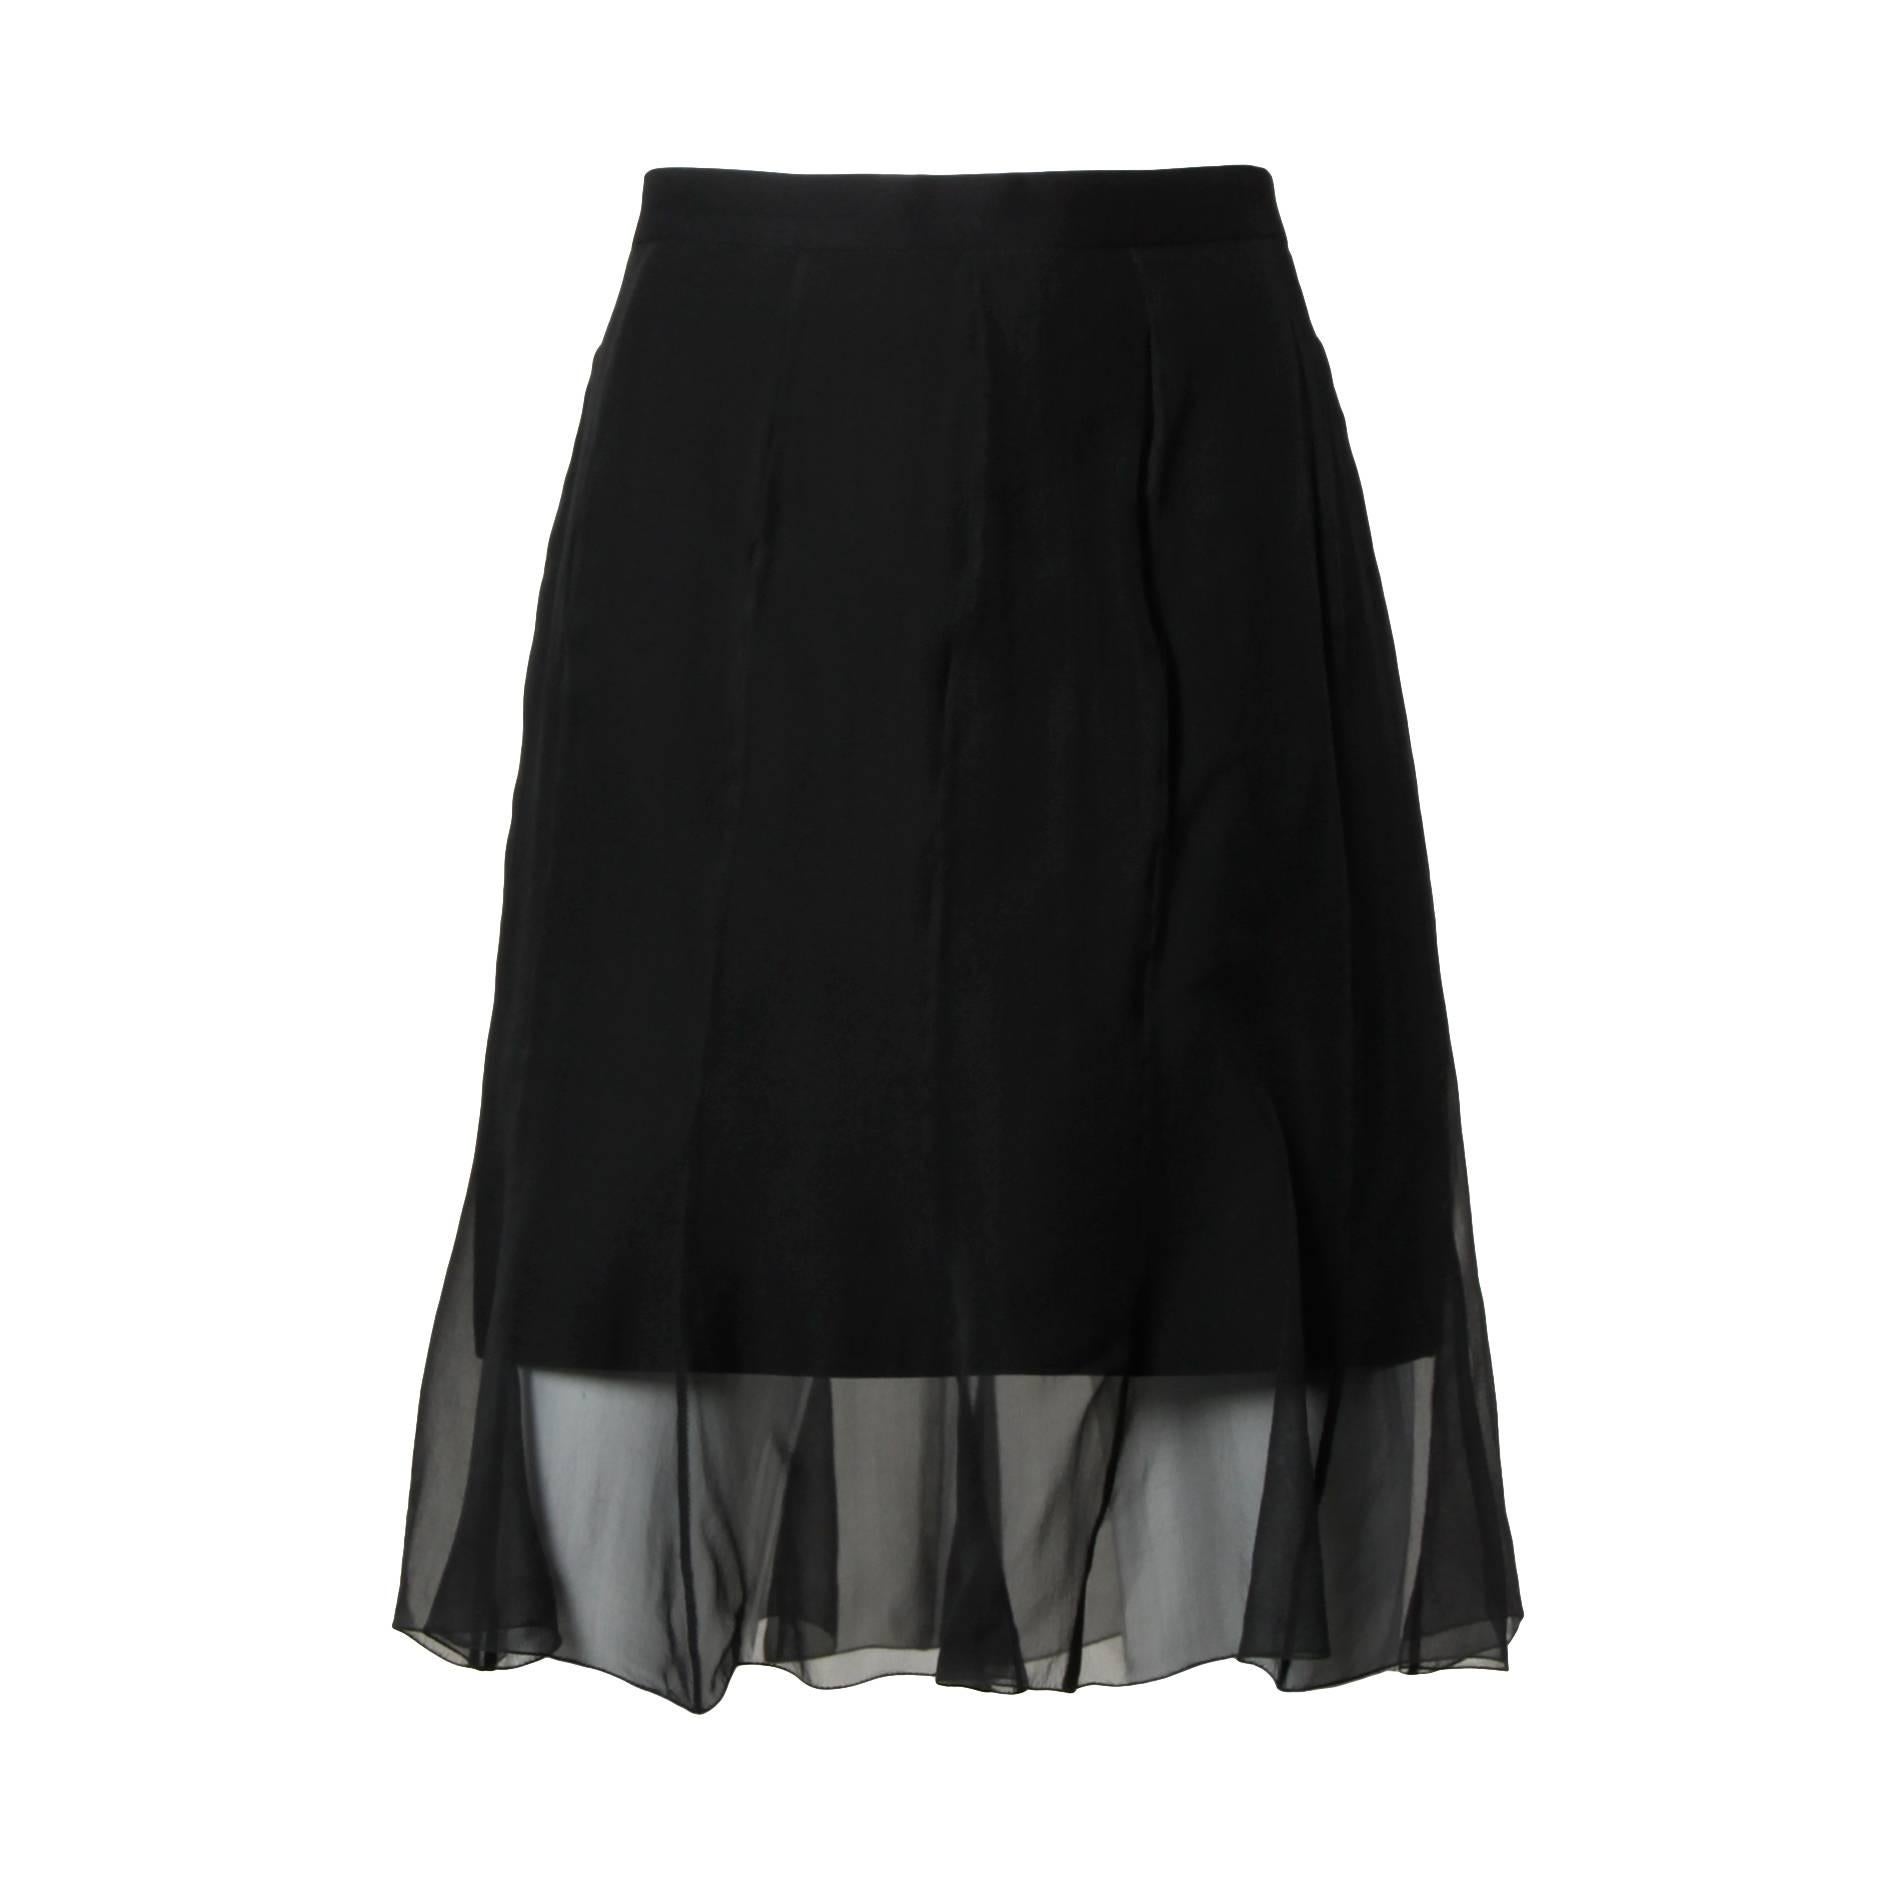 Karl Lagerfeld Vintage Black Skirt with Sheer Mesh Overlay For Sale